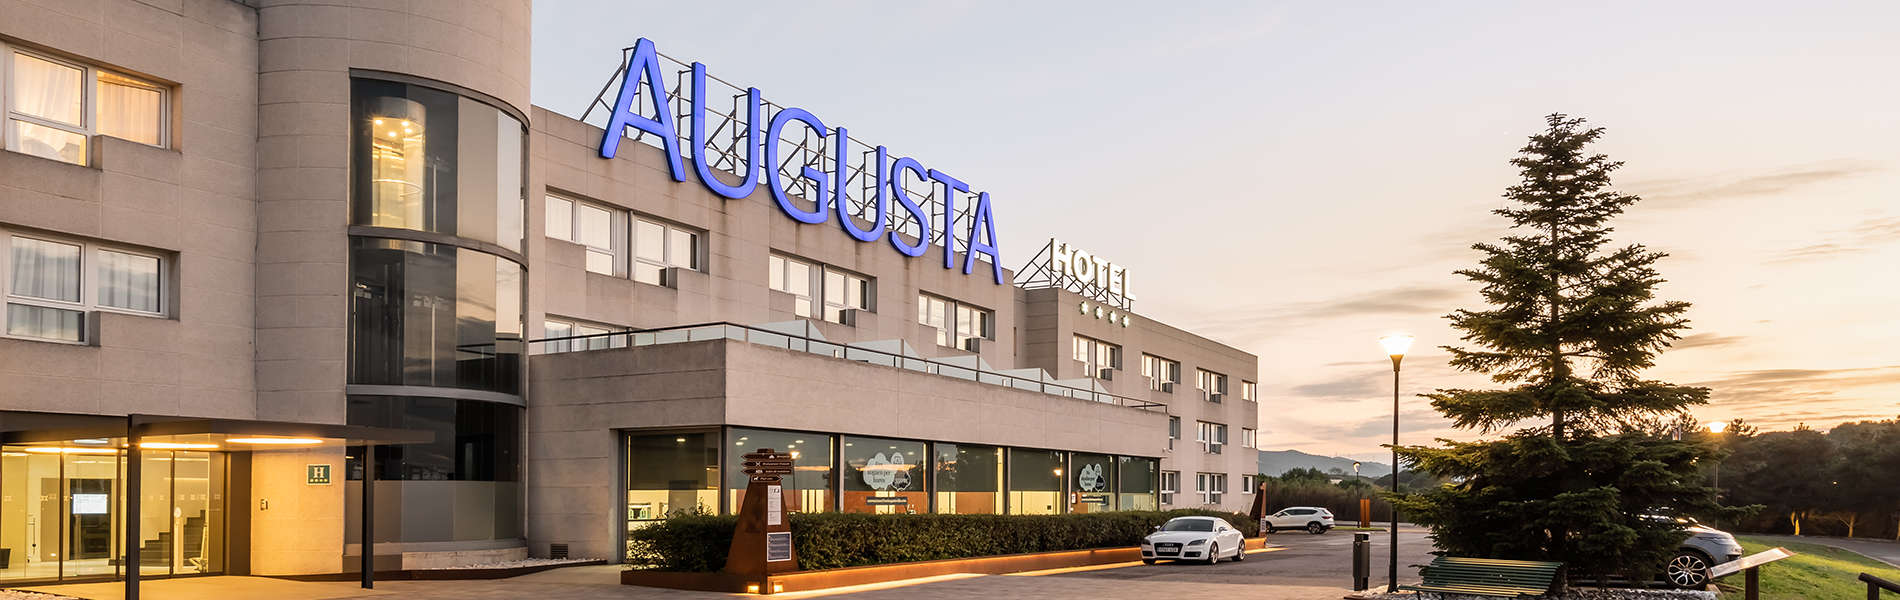 Hotel Augusta Valles